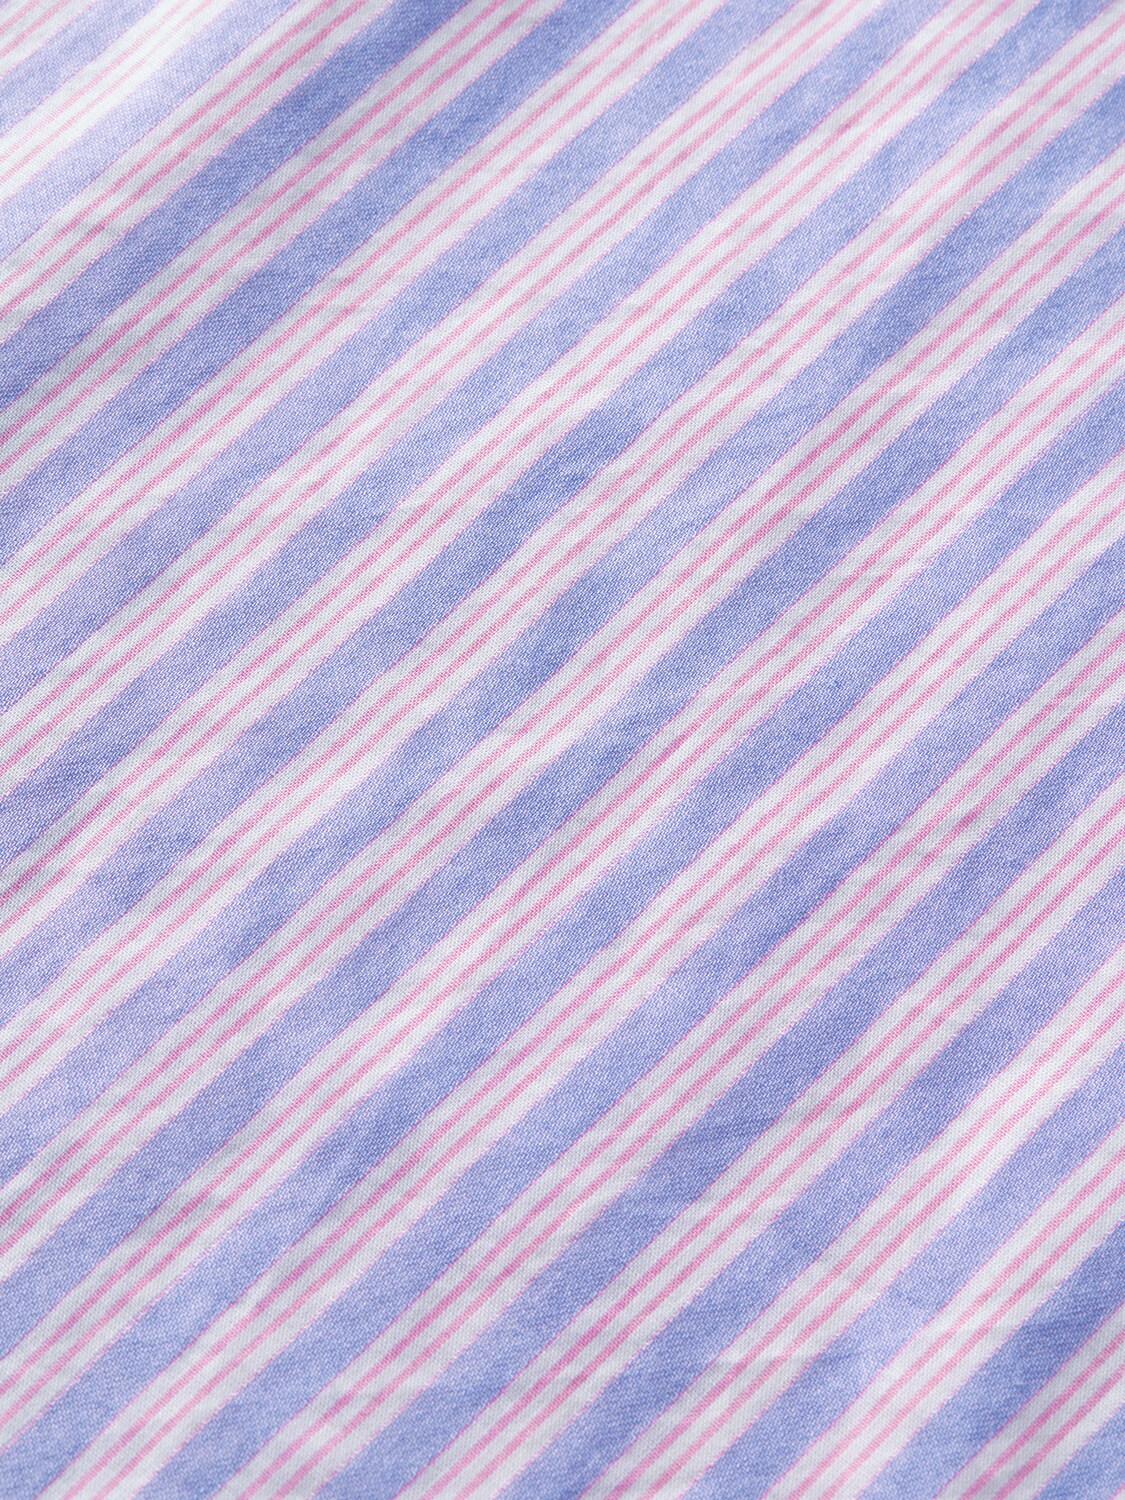 RELAXED FIT- Lightweight striped shirt